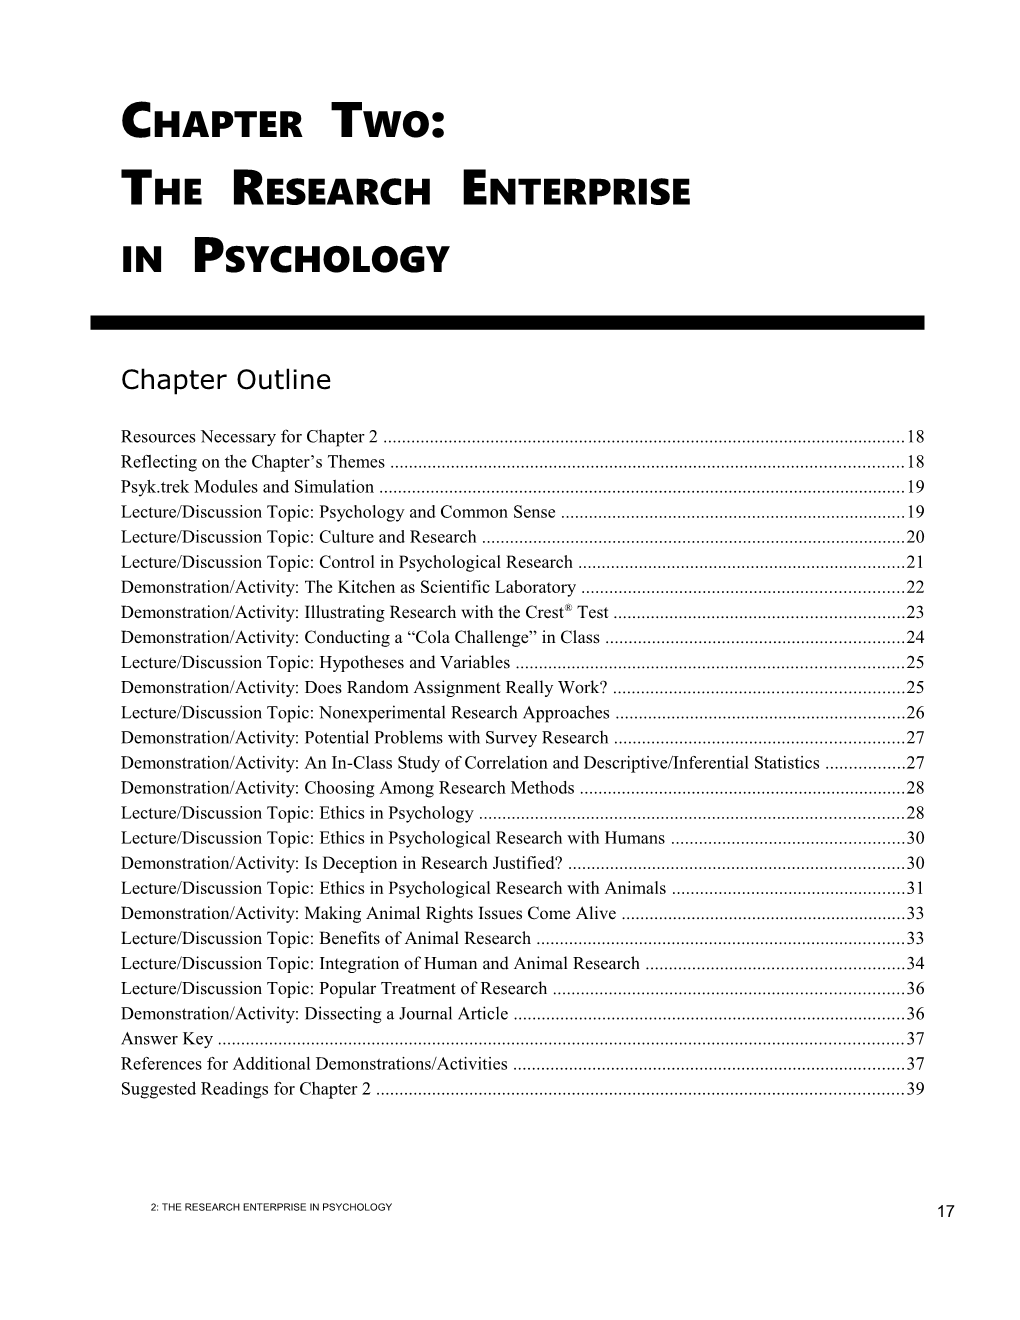 The Research Enterprise